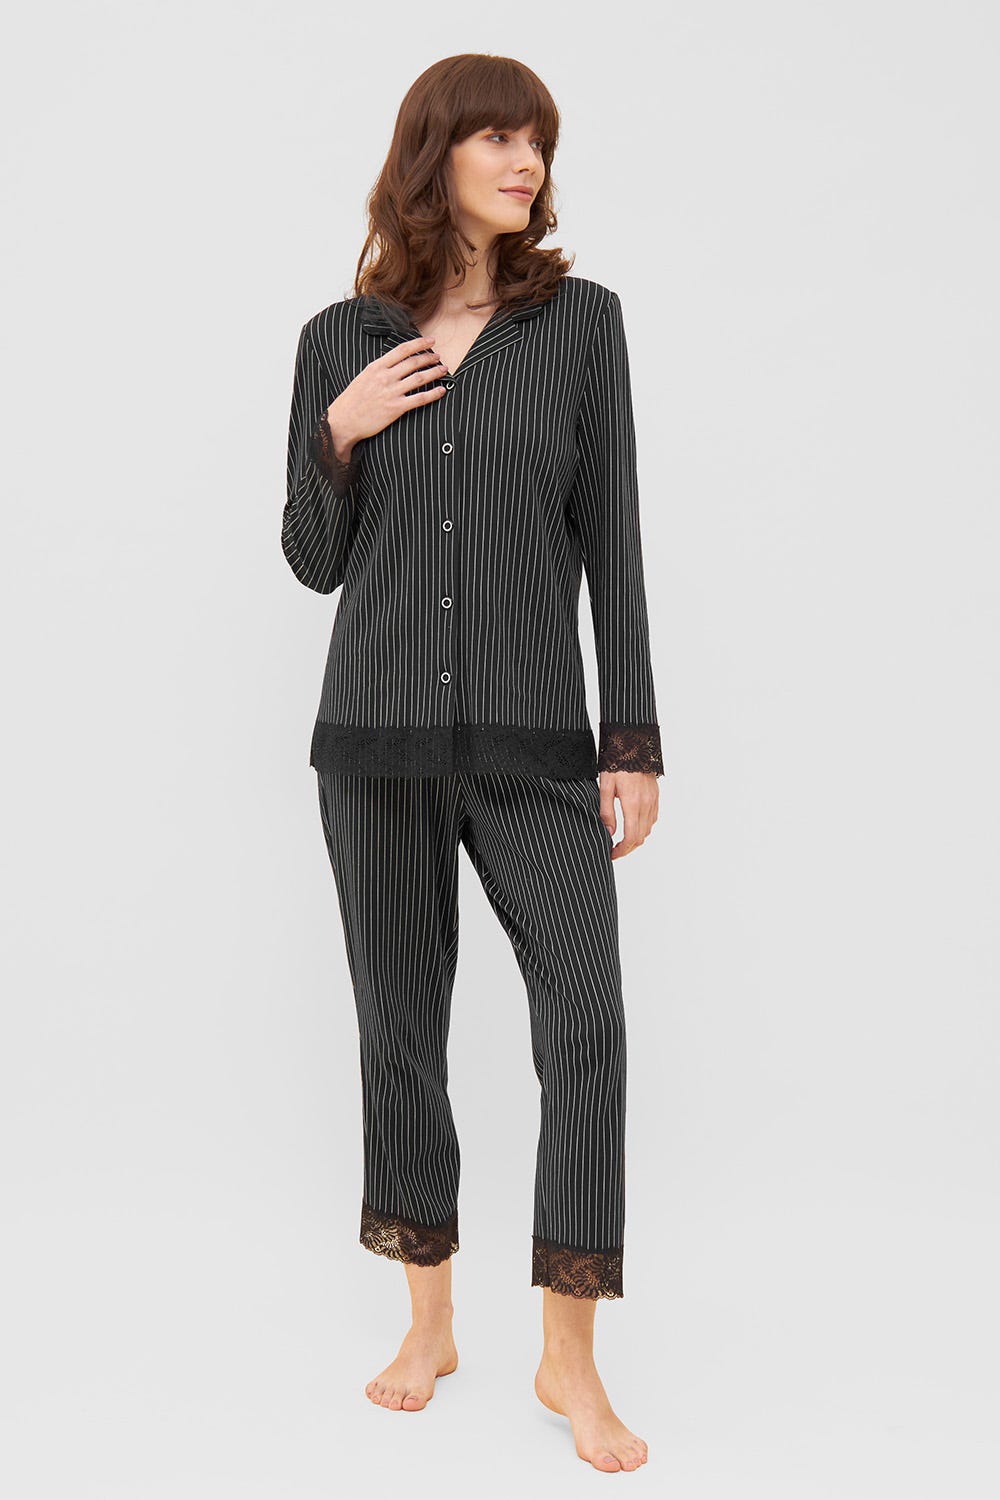 kbsocken Damen Schlafanzug lang Pyjama Nachtwäsche Sleepwear Nightwear 100% Baumwolle 